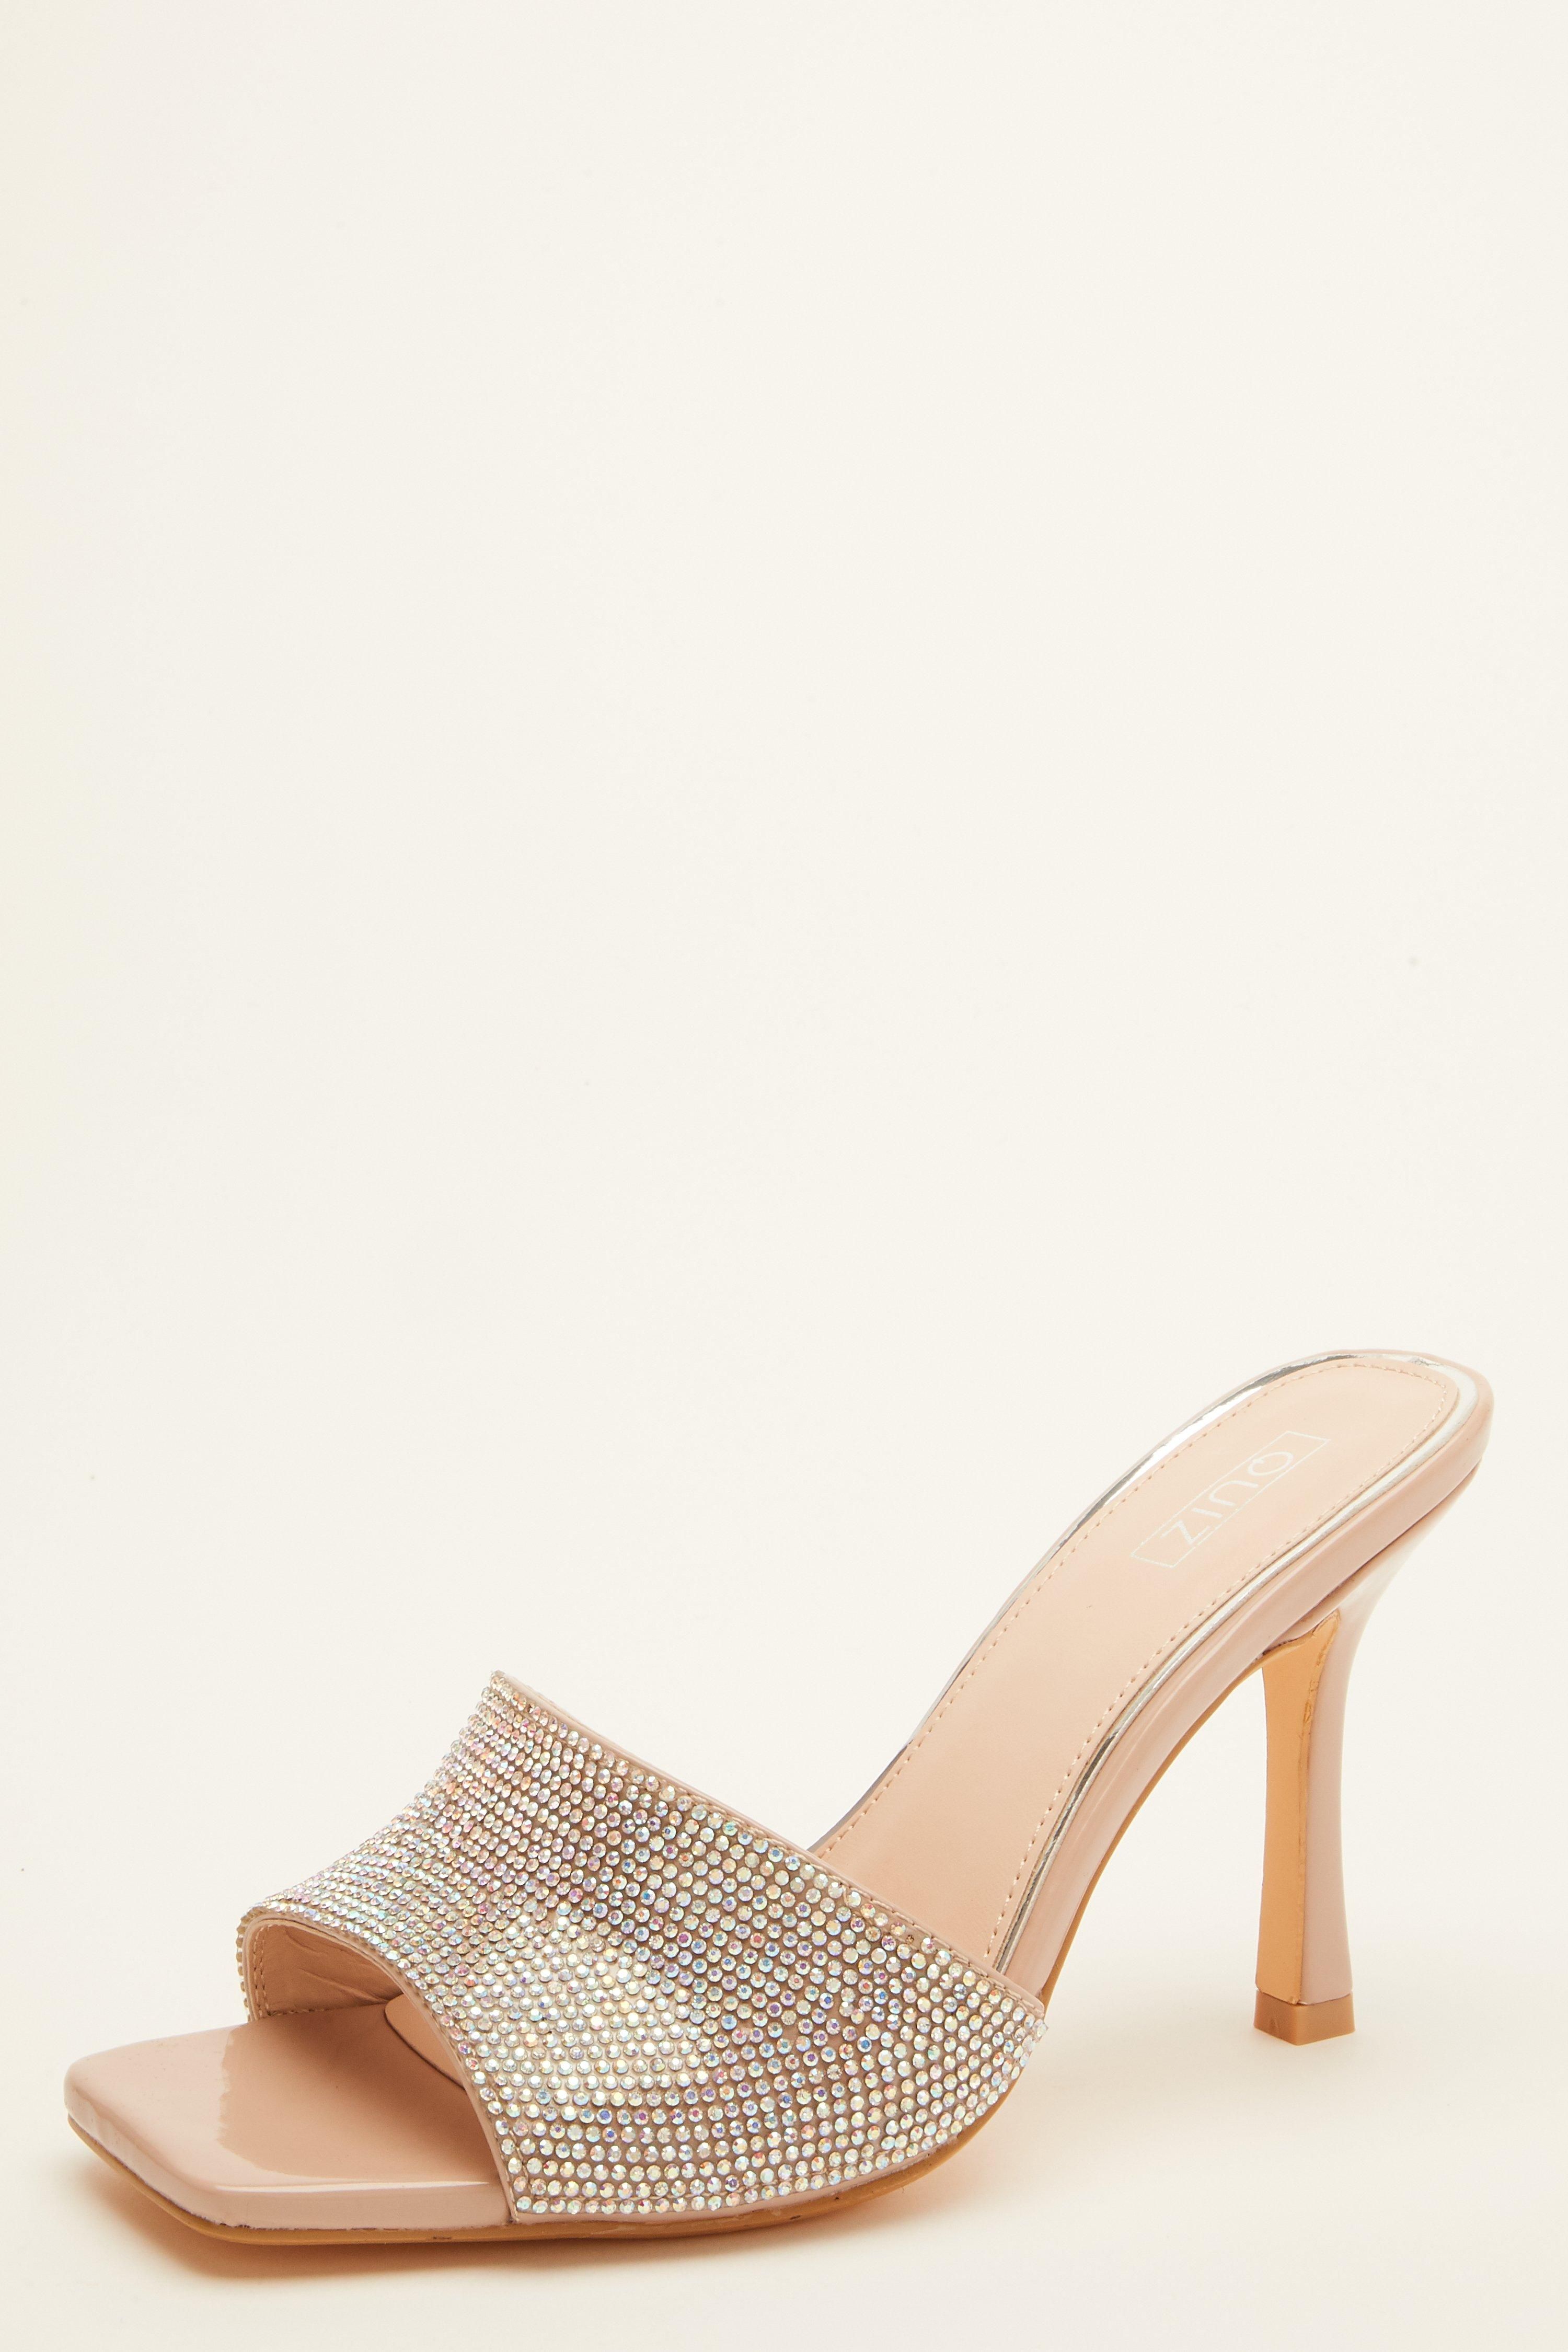 - Slip on style  - Diamante strap   - Mule style  - Flare heel  - Heel height: 4.5